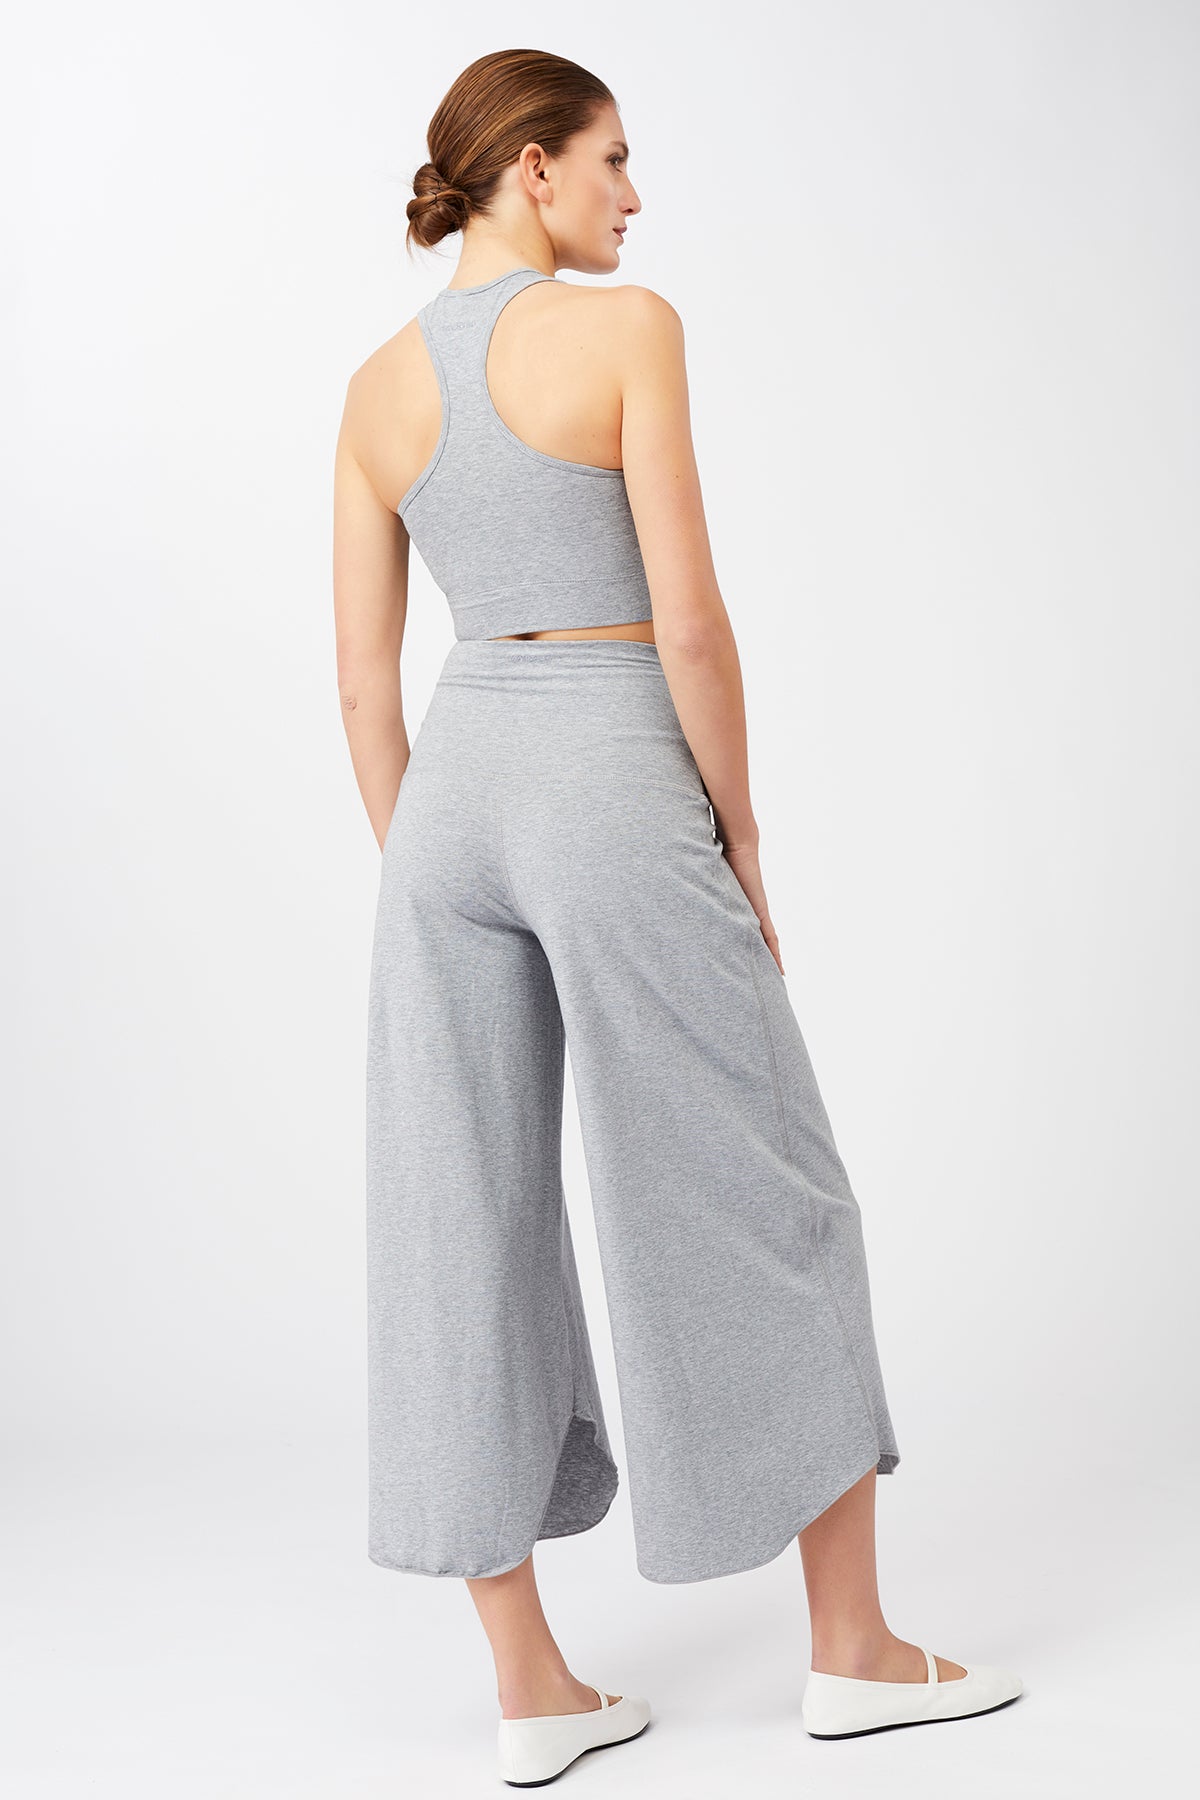 Mandala Yoga Bra Grau Outfit Rückseite - Smooth Bra